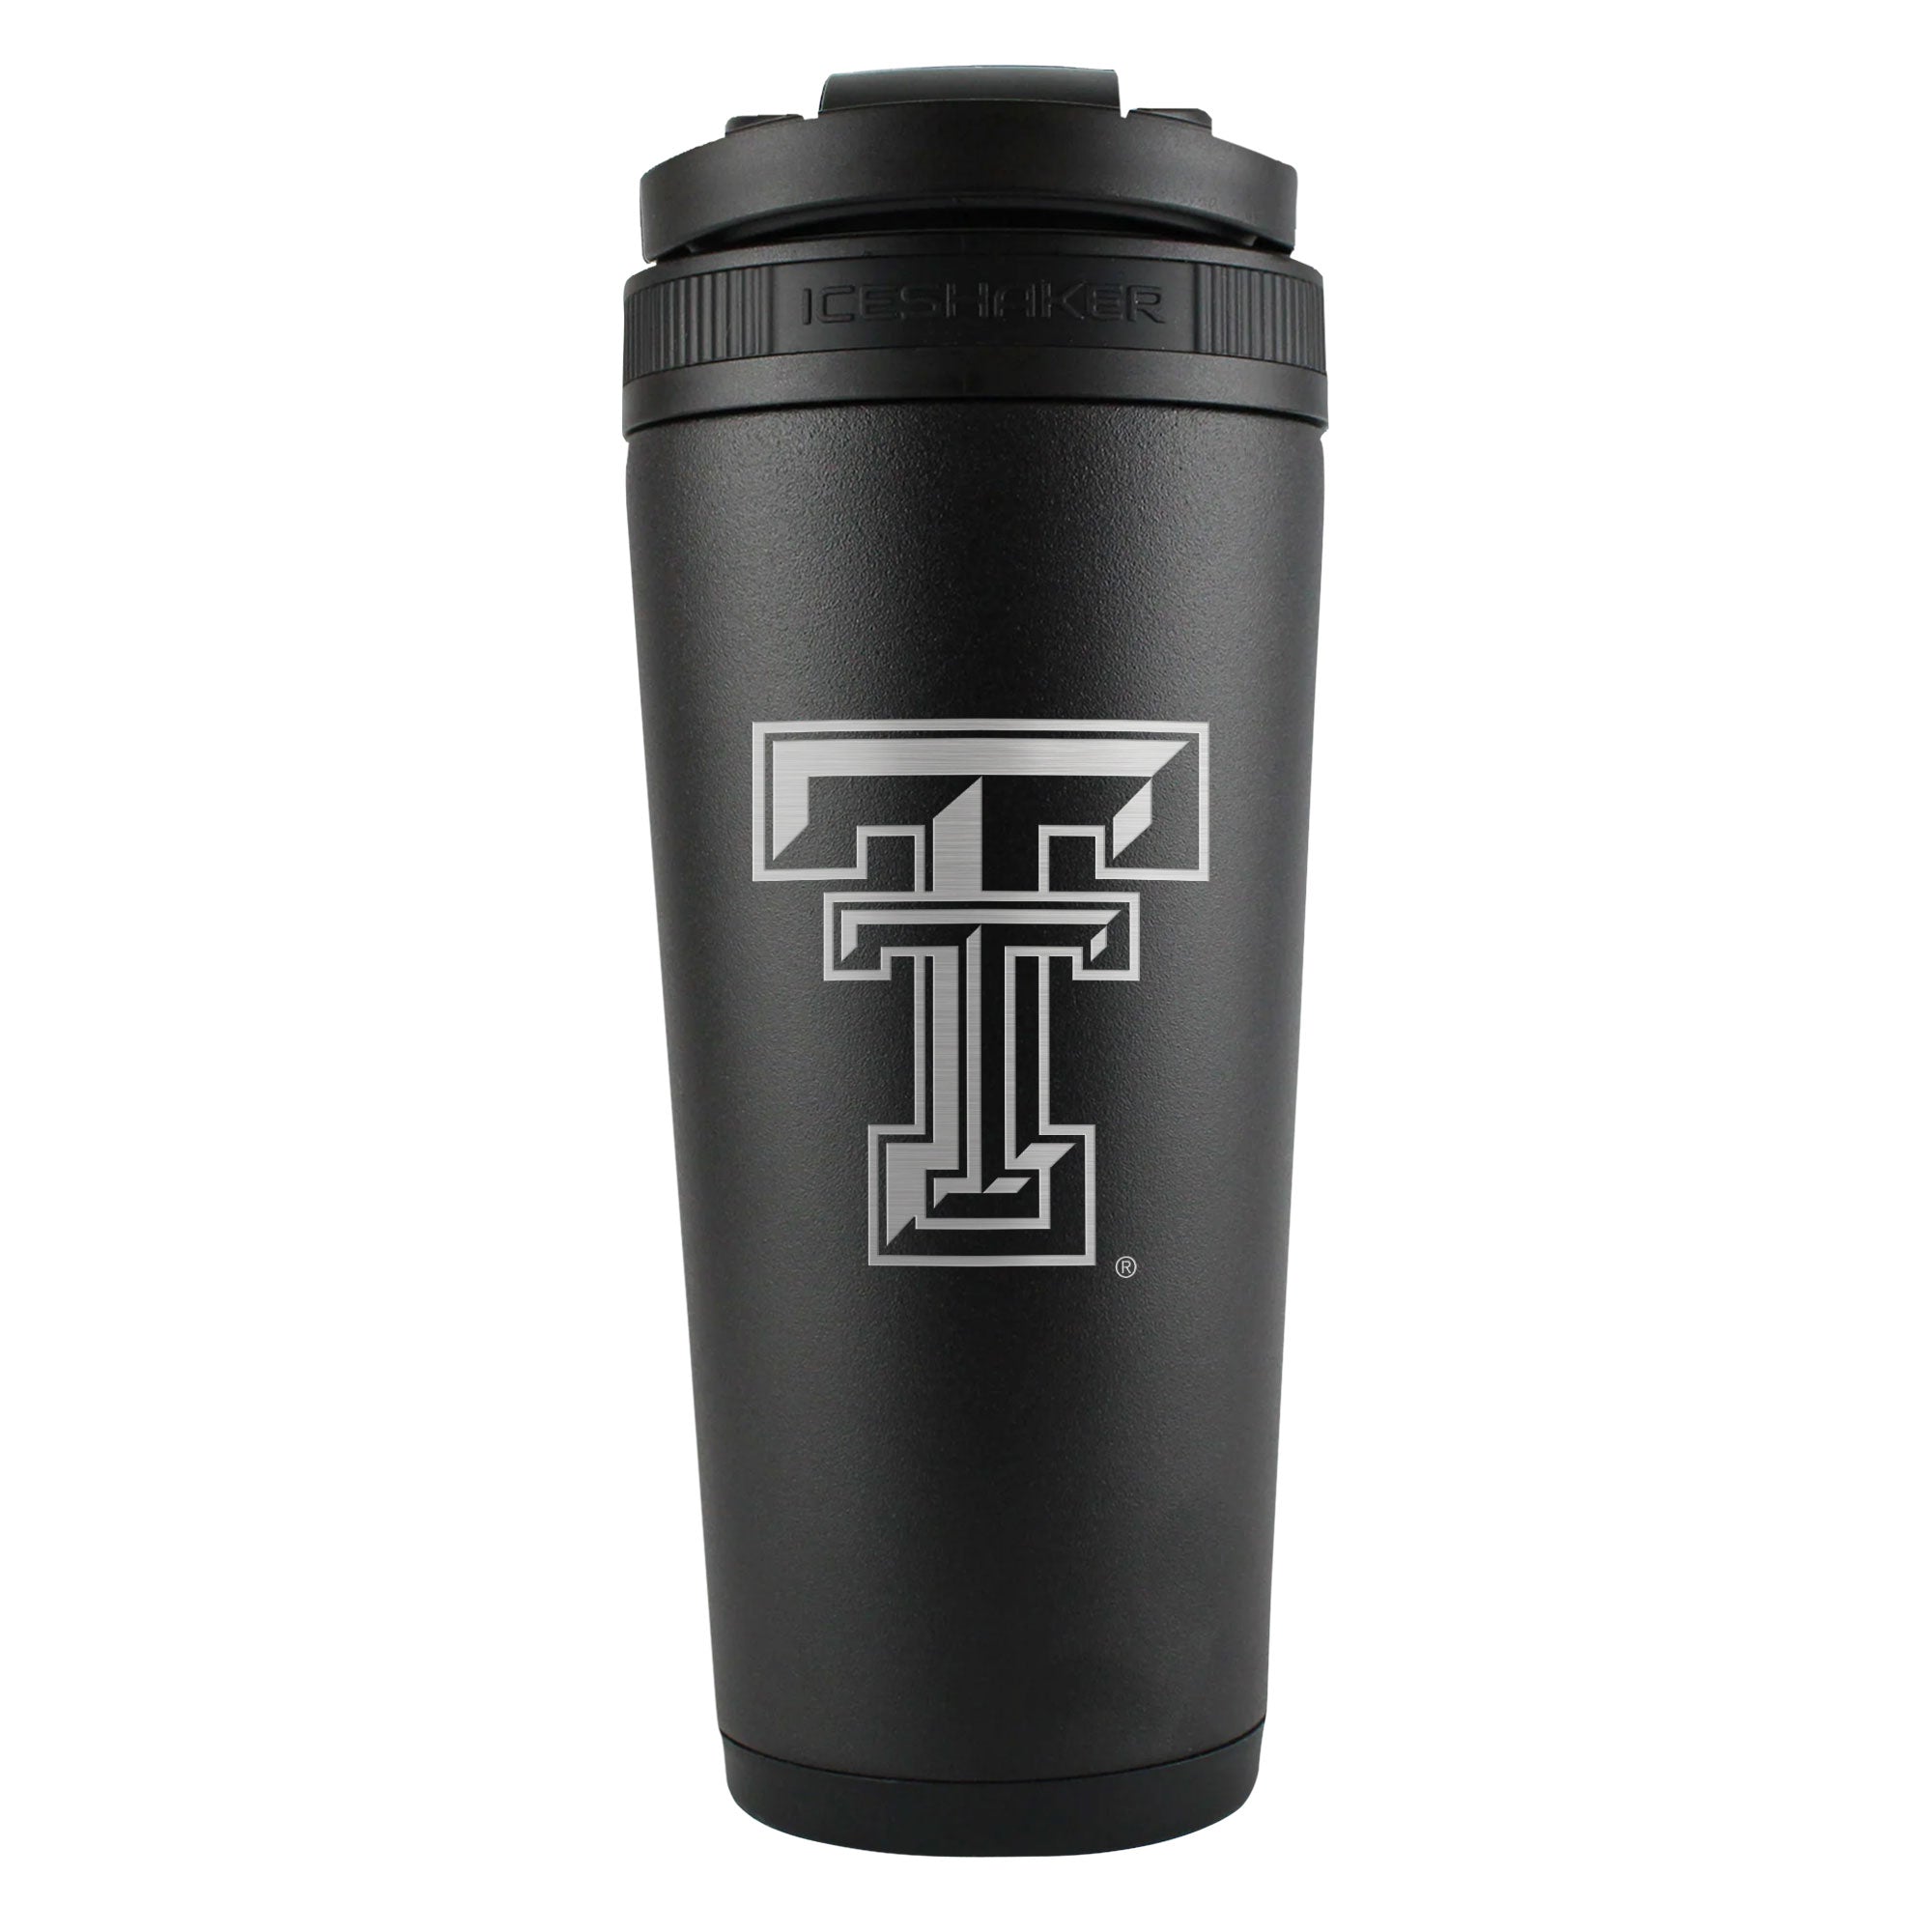 Officially Licensed Texas Tech University 26oz Ice Shaker - Black